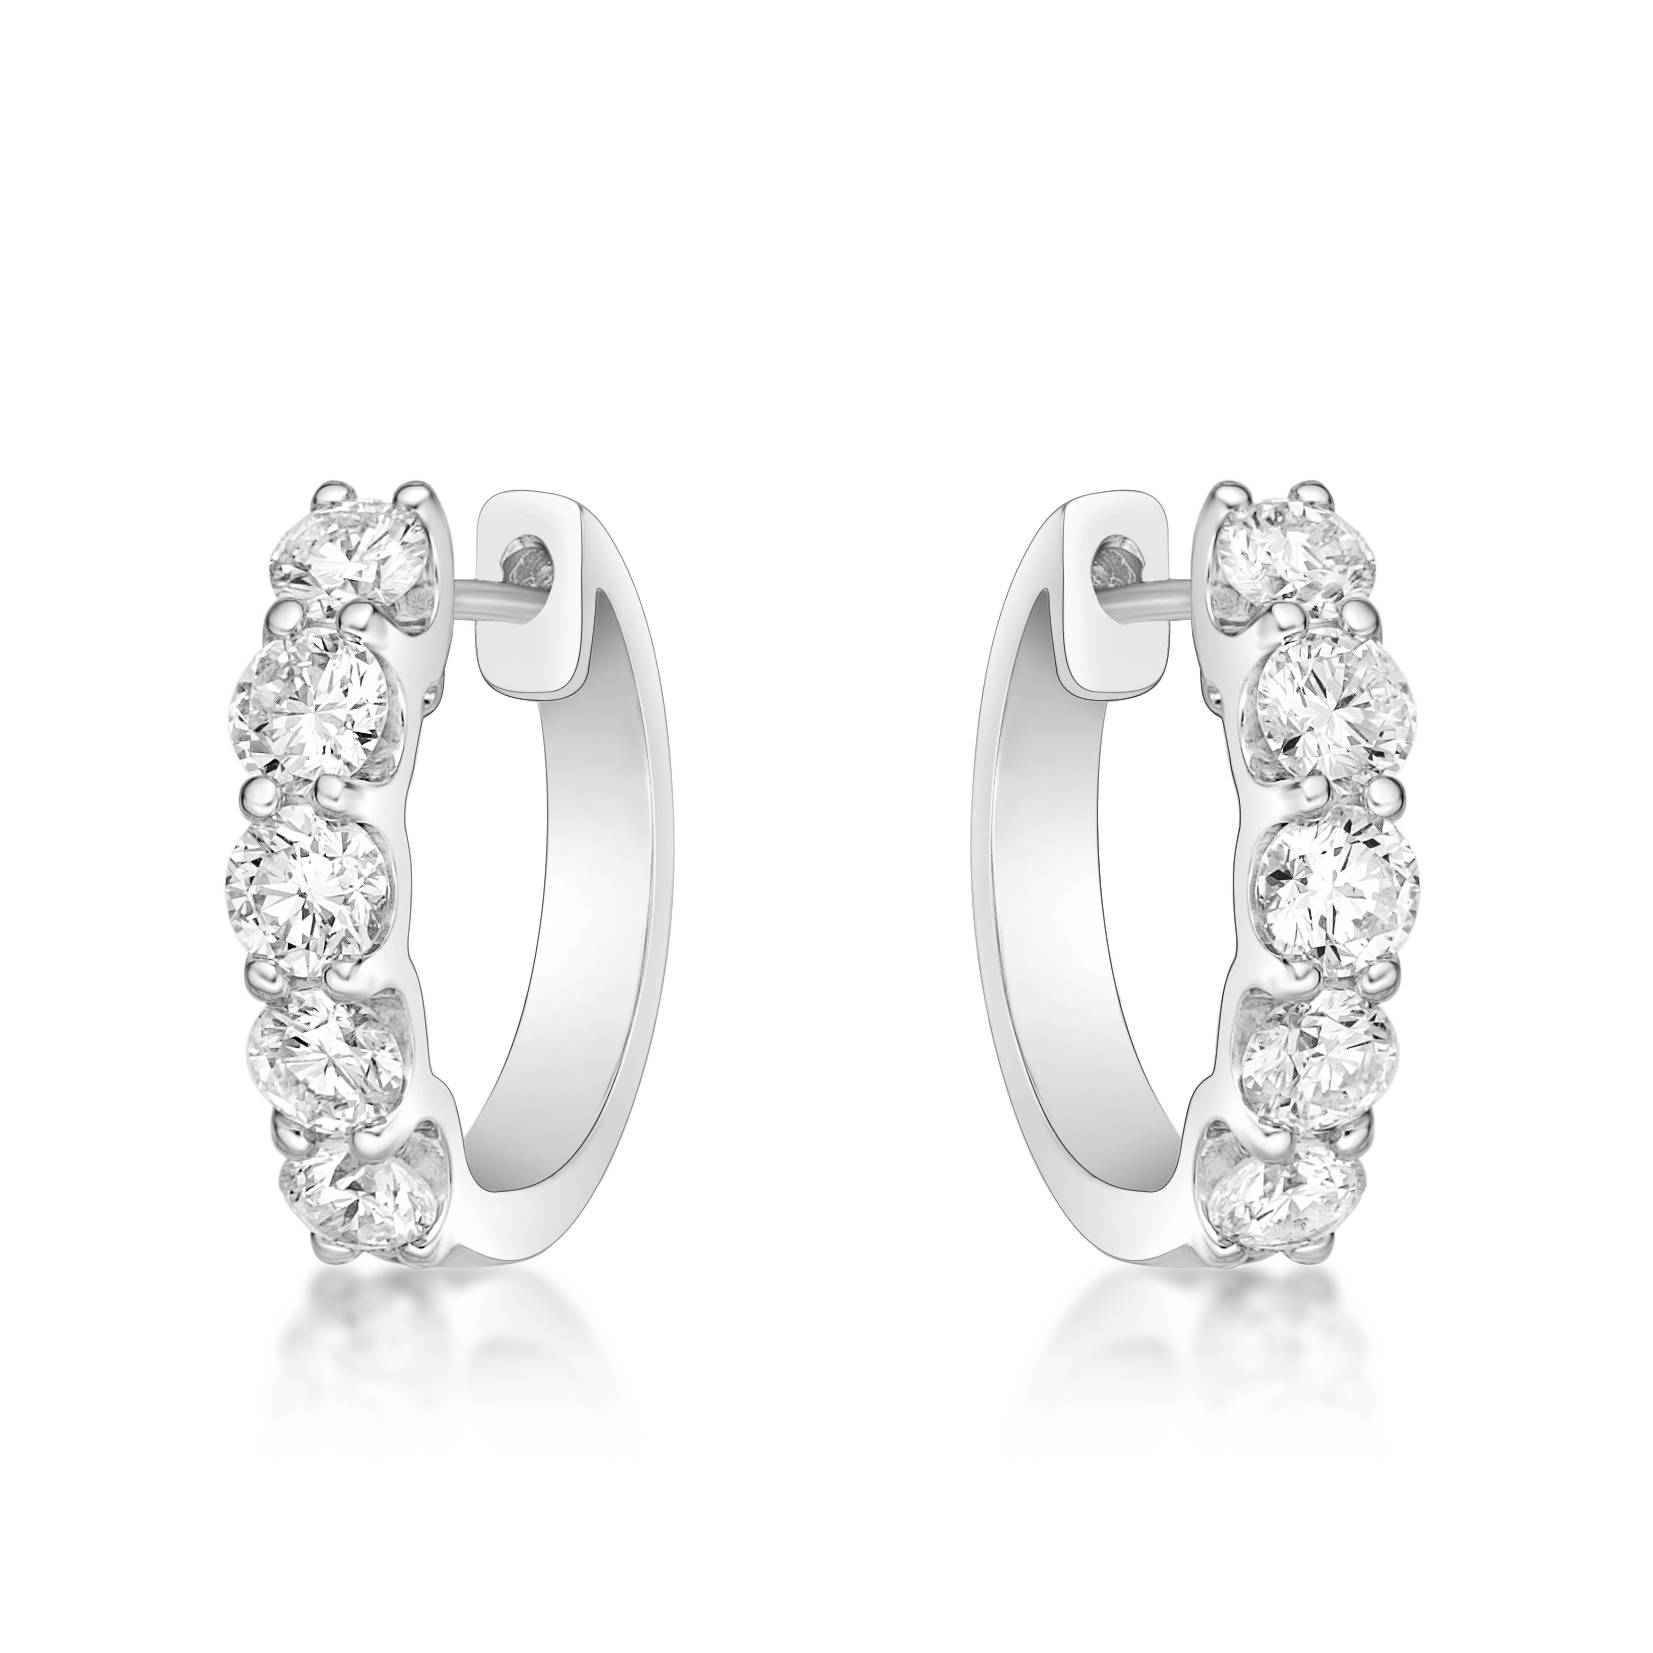 Diamond Rings Brisbane, Engagement, Wedding - Diamonds International